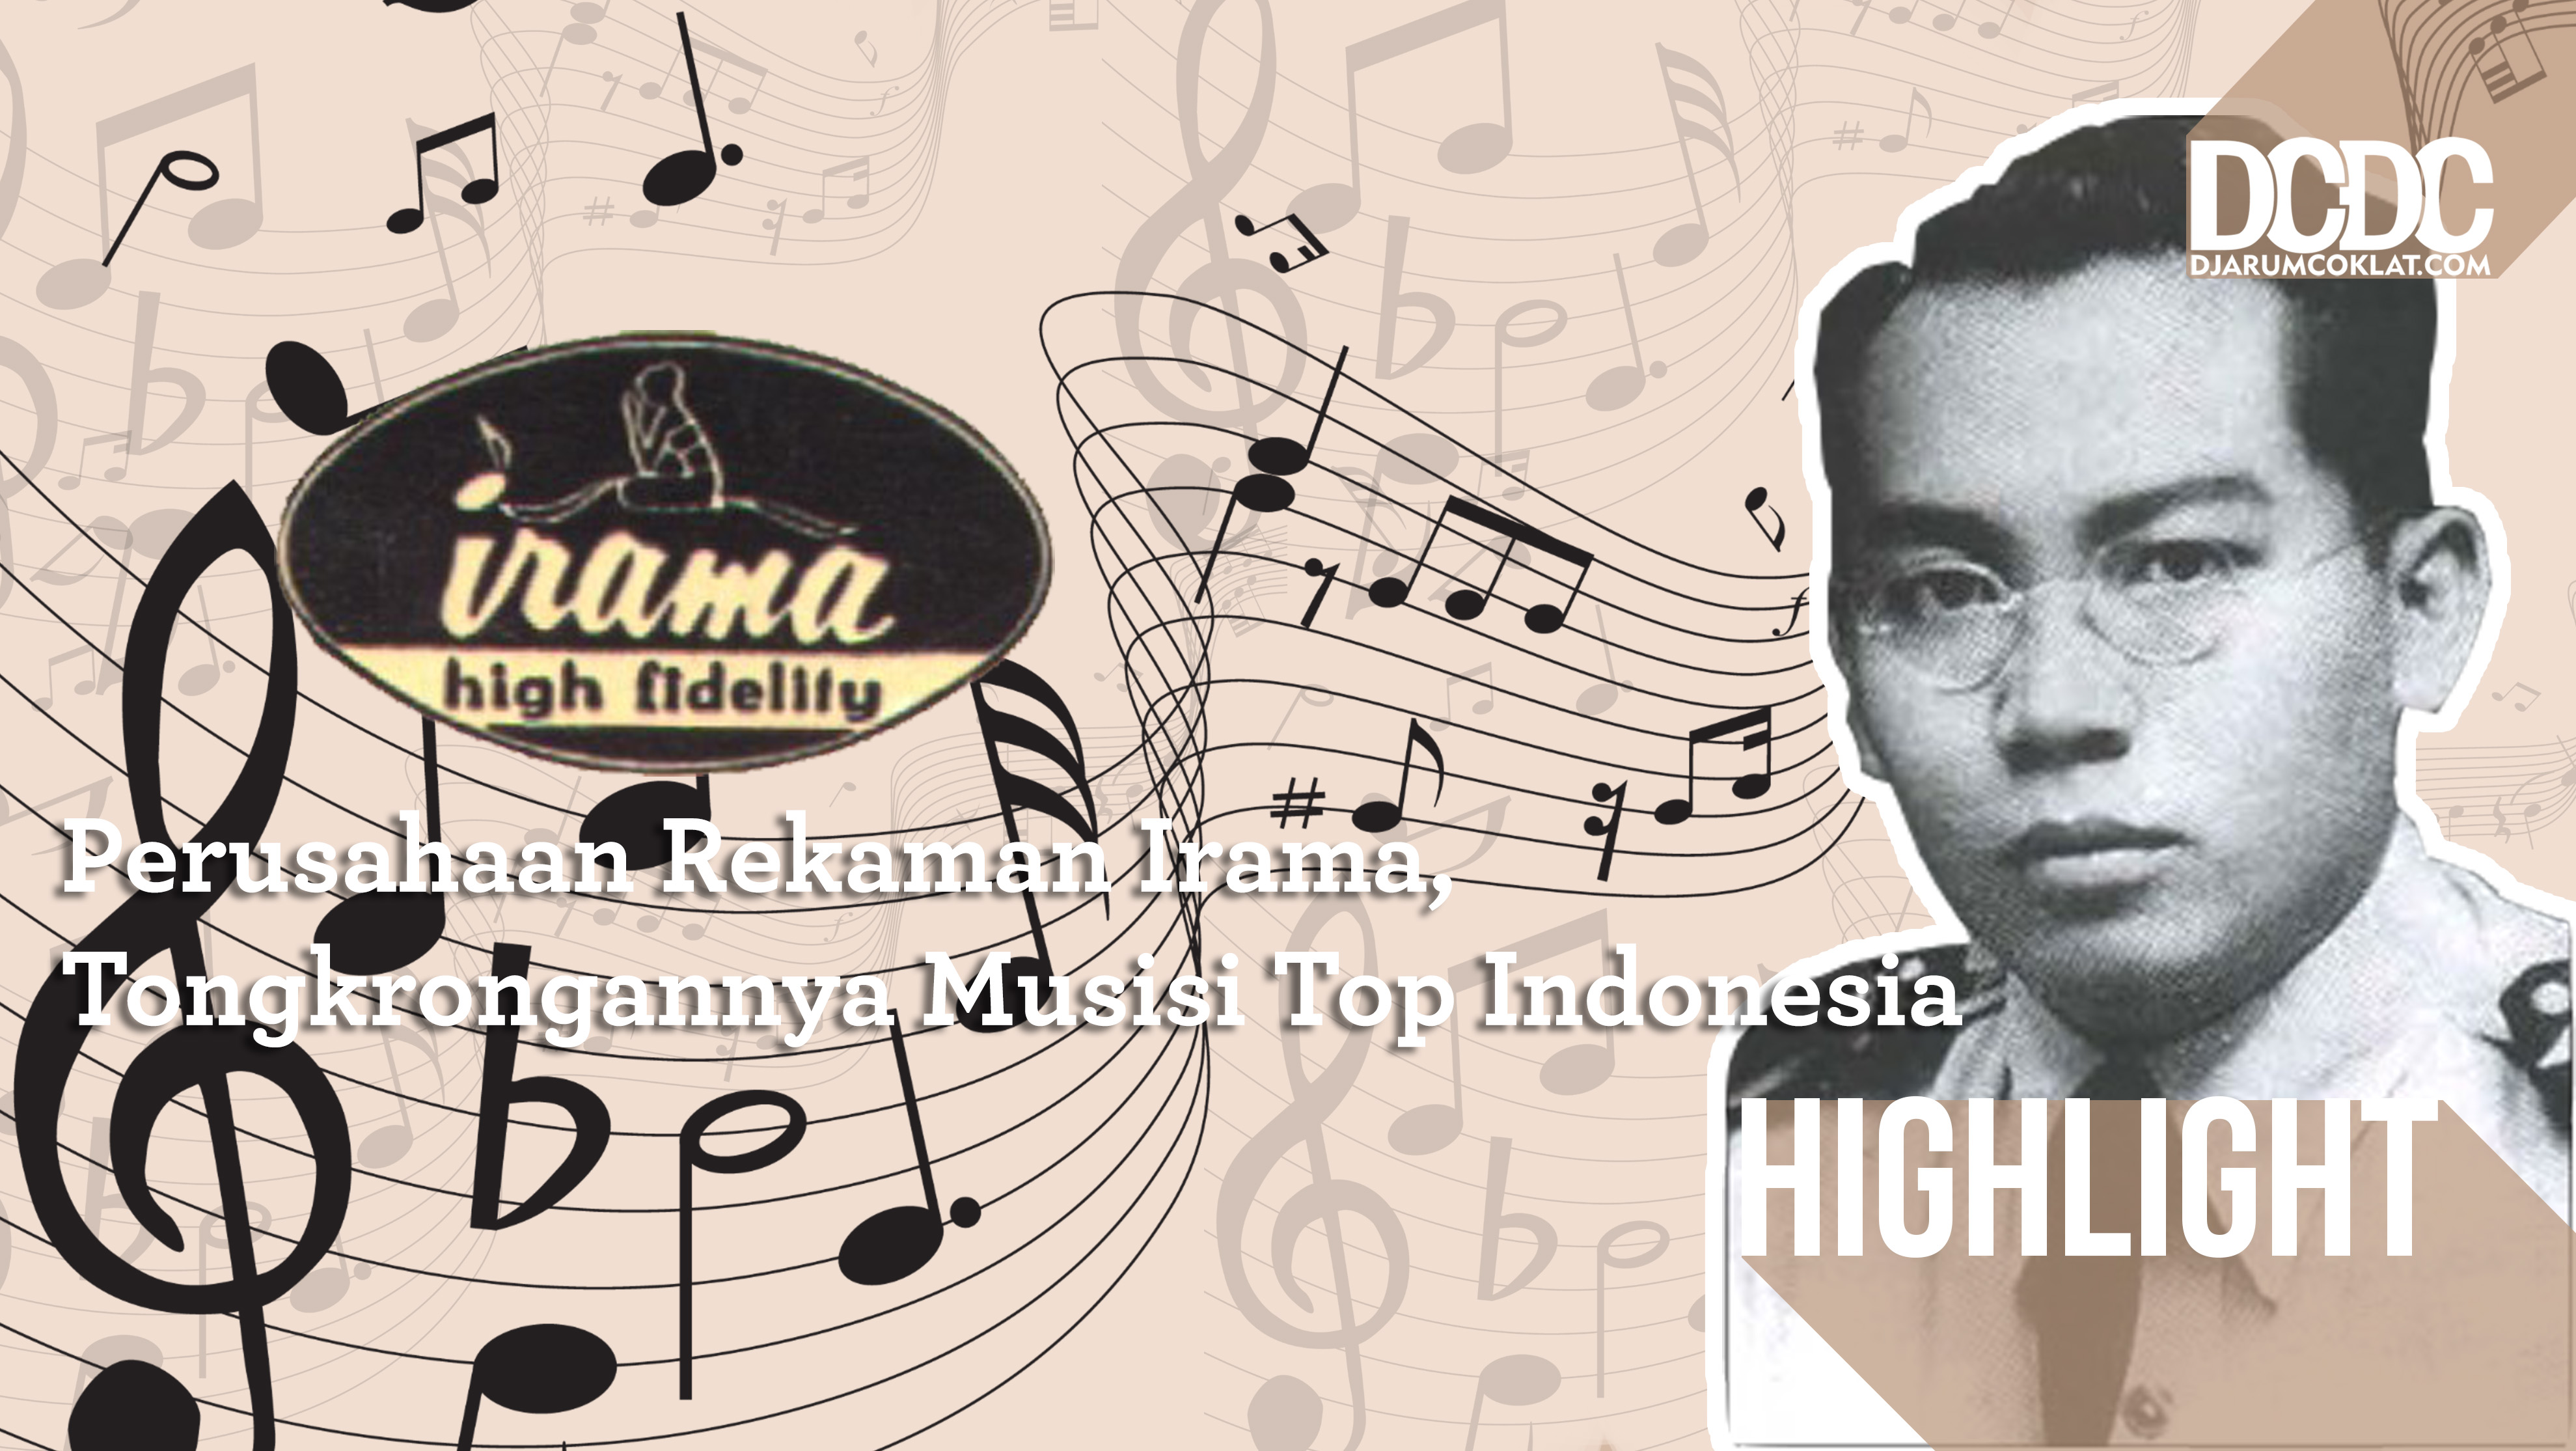 Perusahaan Rekaman Irama, Tongkrongannya Musisi Top Indonesia